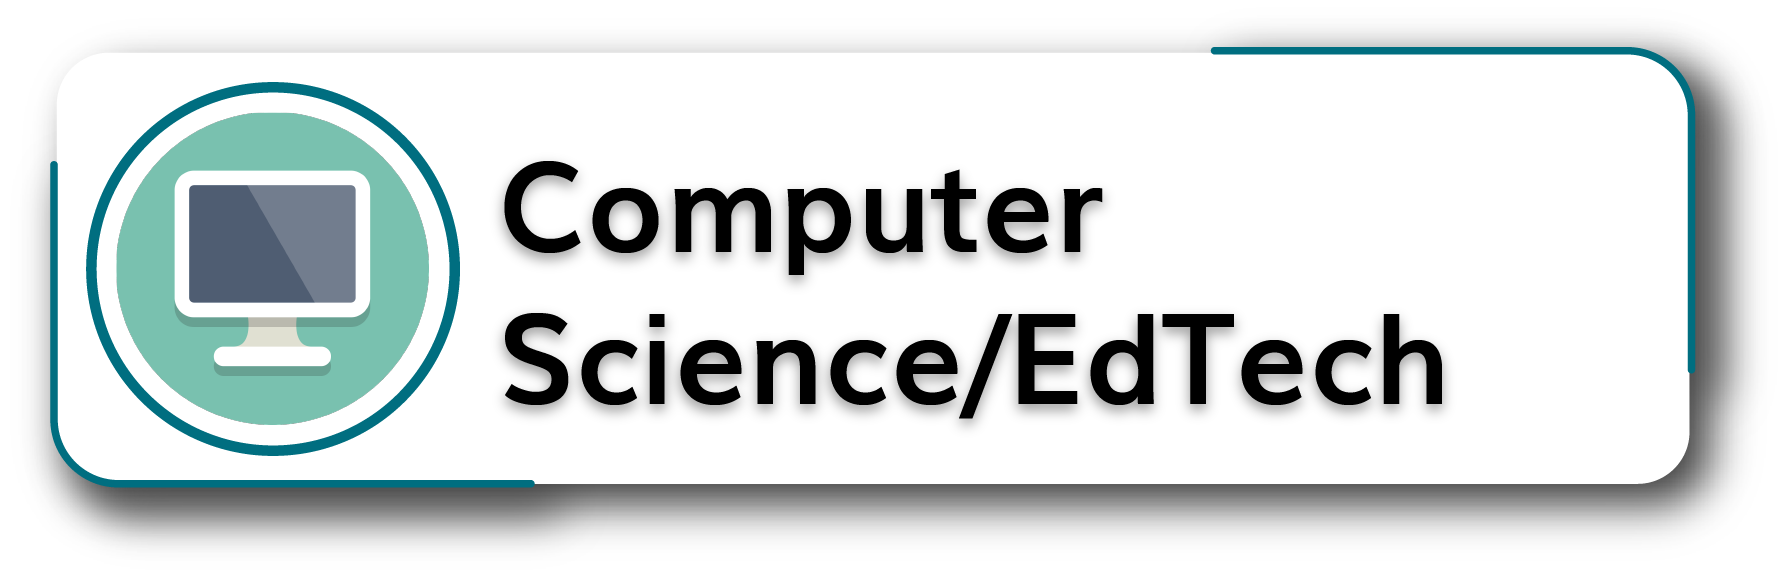 Computer Science/EdTech Button